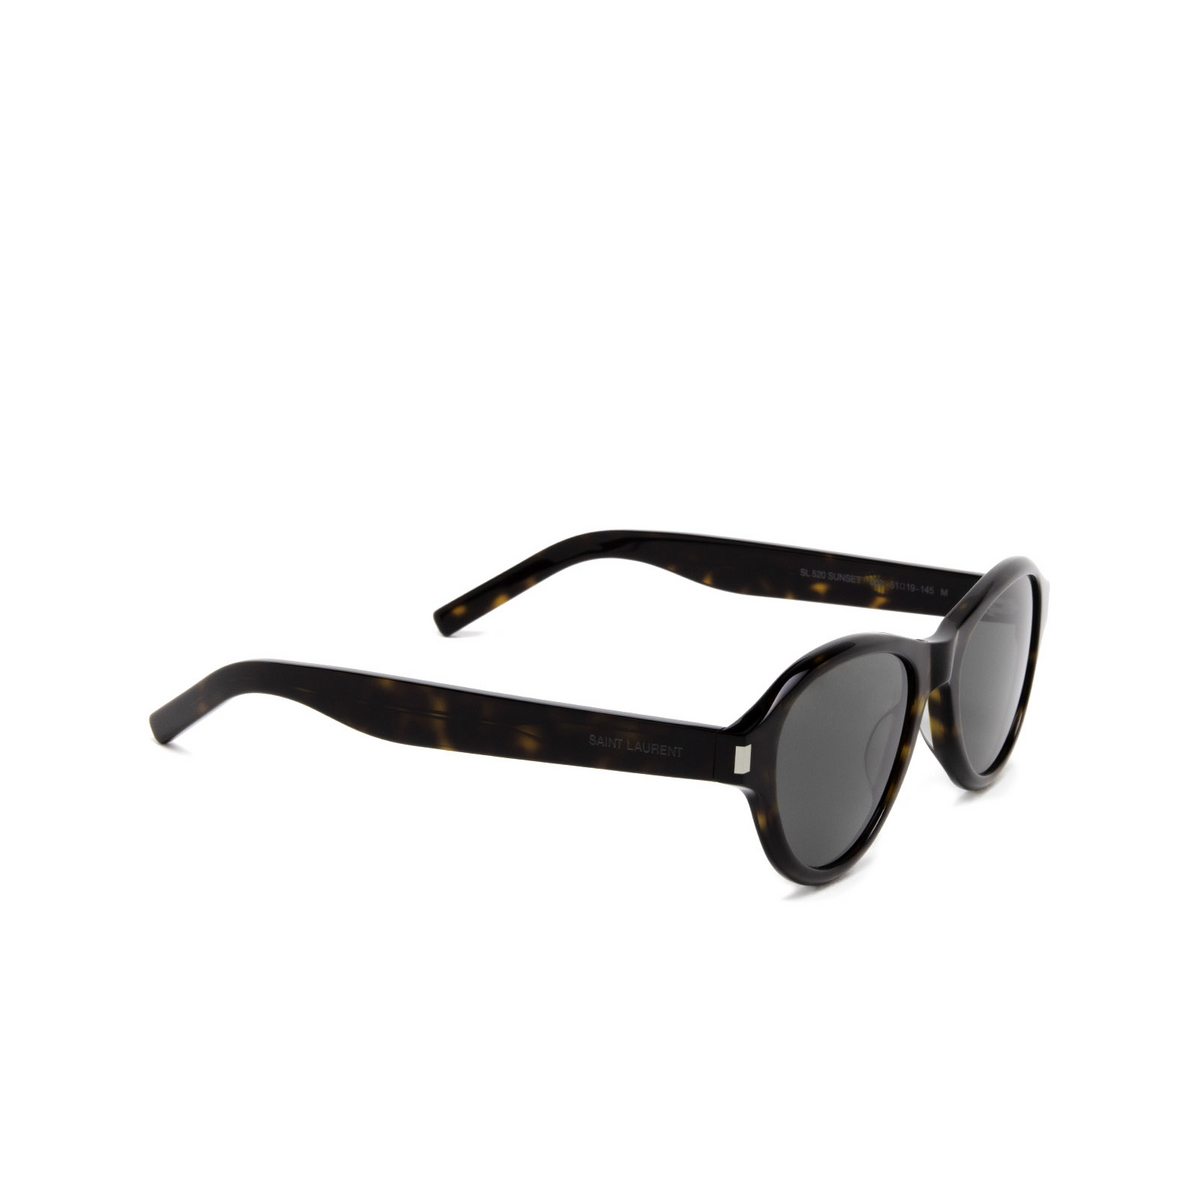 Saint Laurent® Oval Sunglasses: SL 520 SUNSET color Havana 002 - three-quarters view.